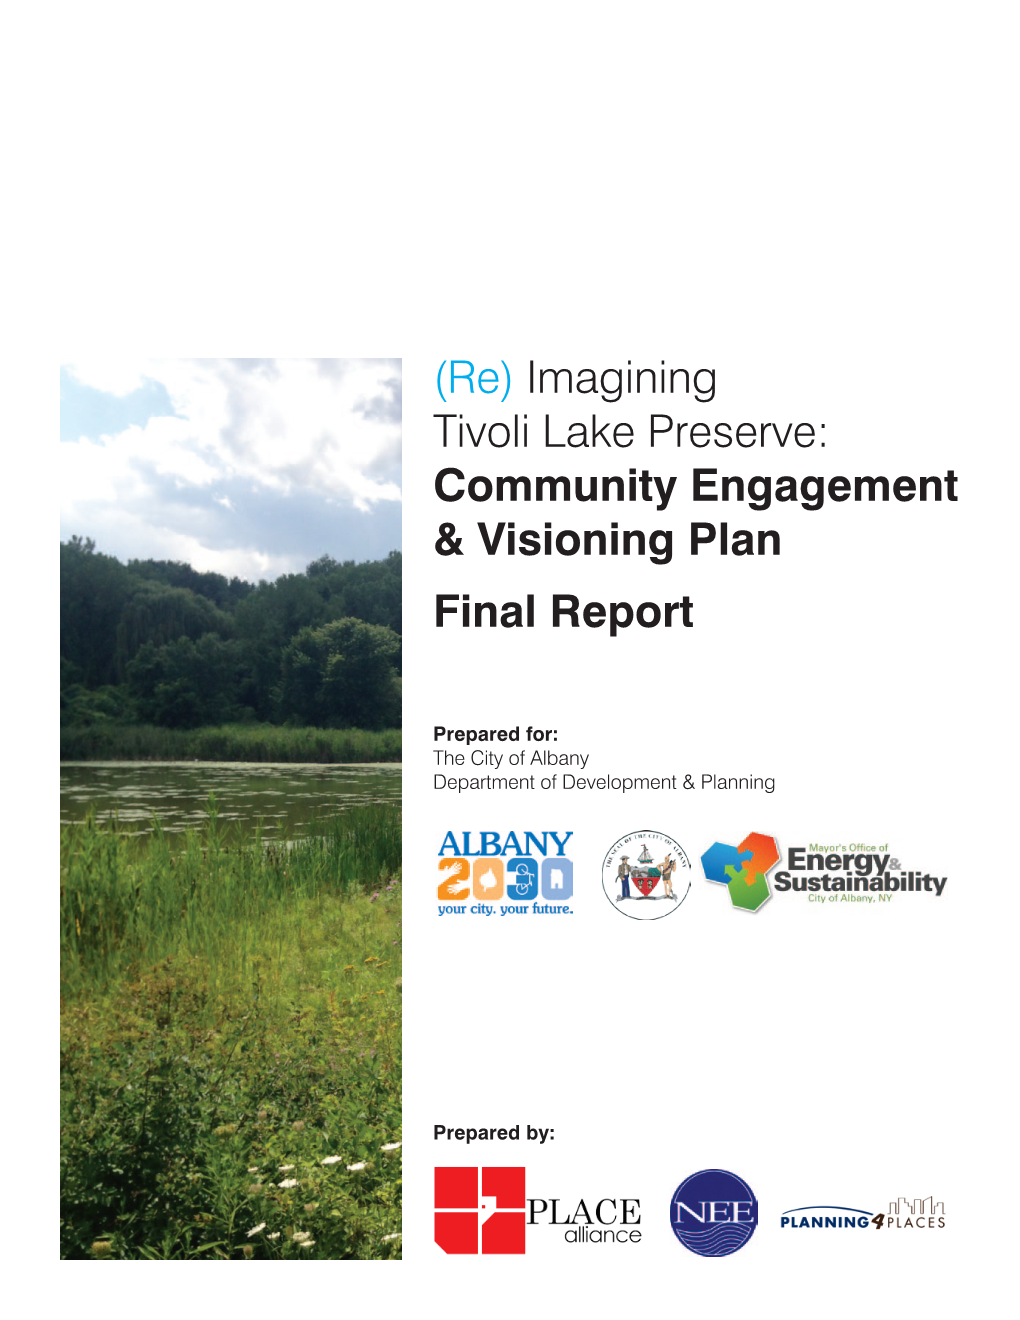 Tivoli Lake Preserve: Community Engagement & Visioning Plan Final